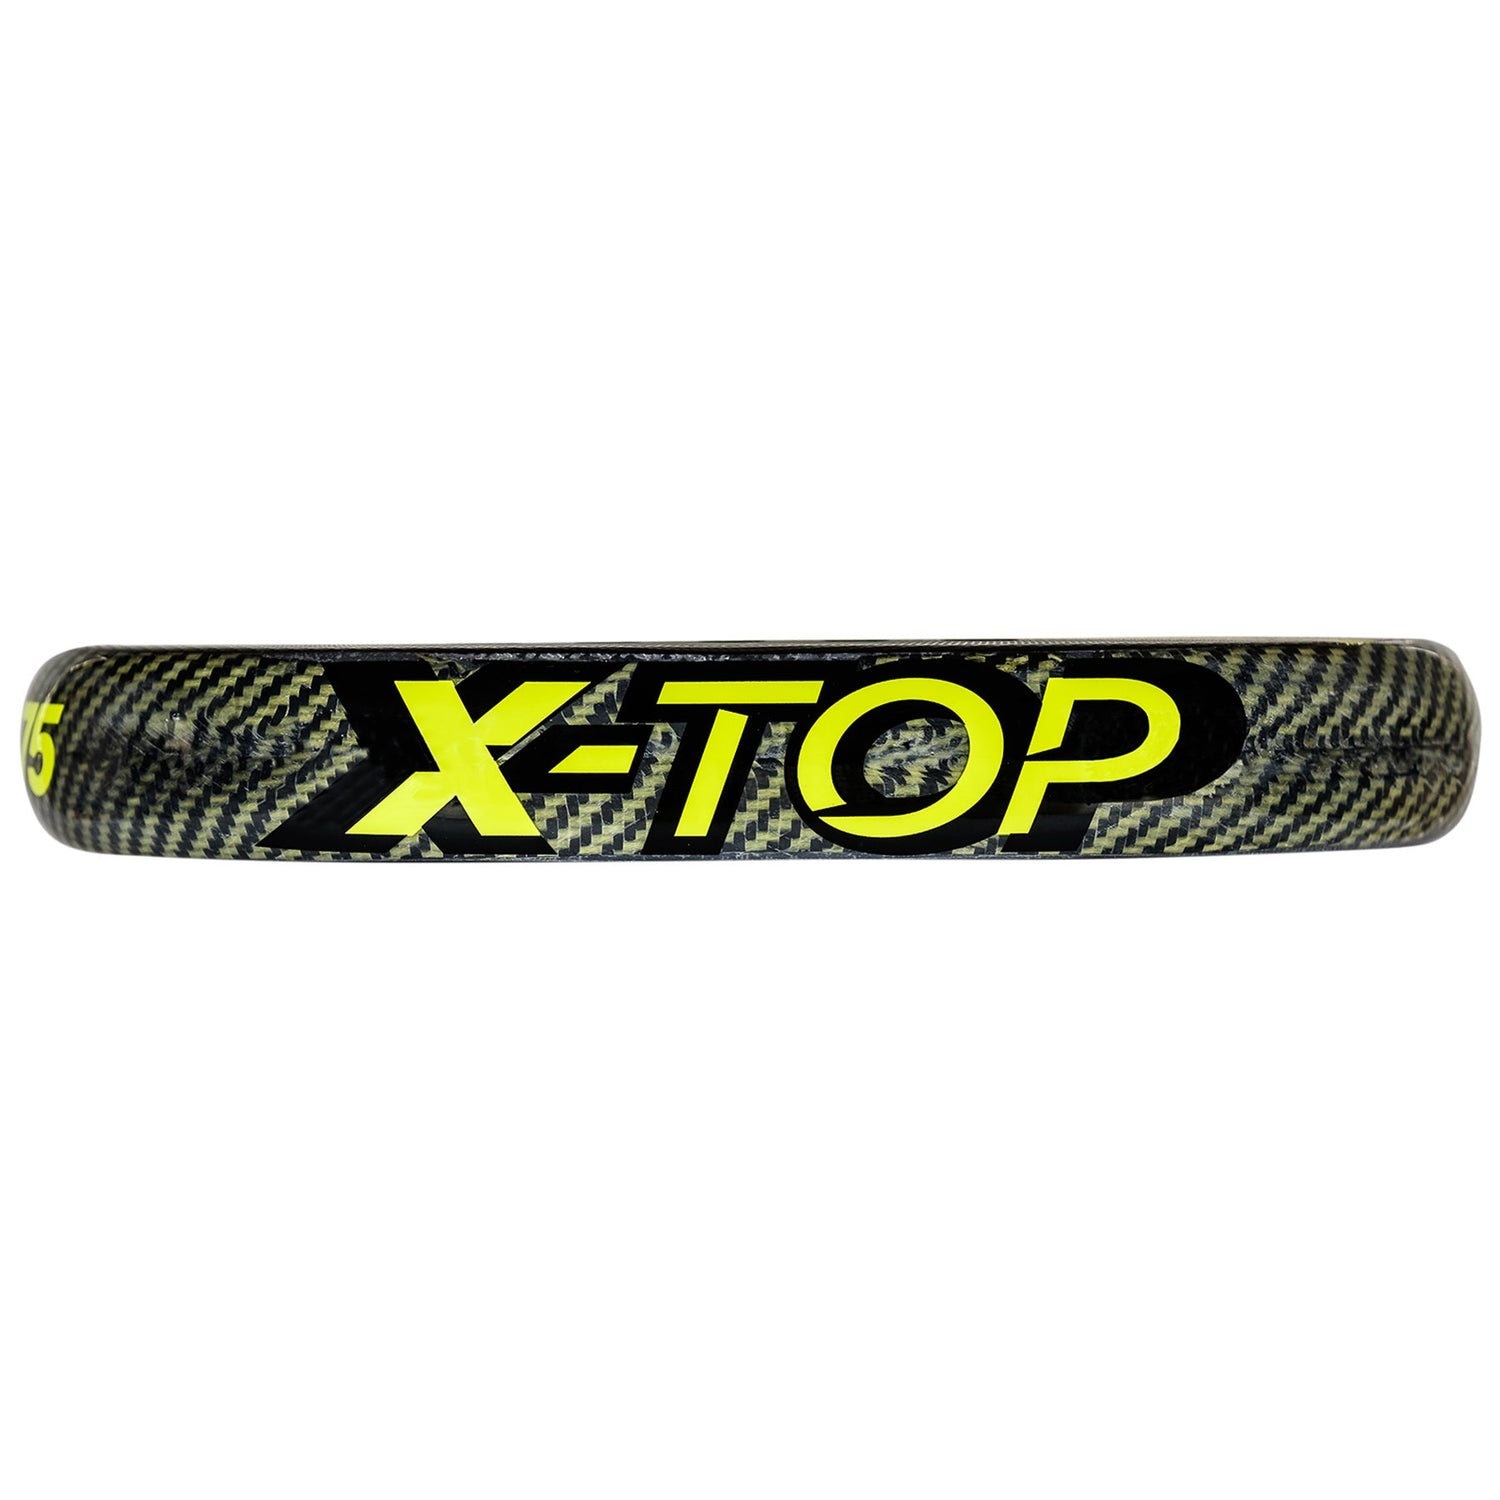 Tecnifibre Padel Racket featuring X-TOP Technology